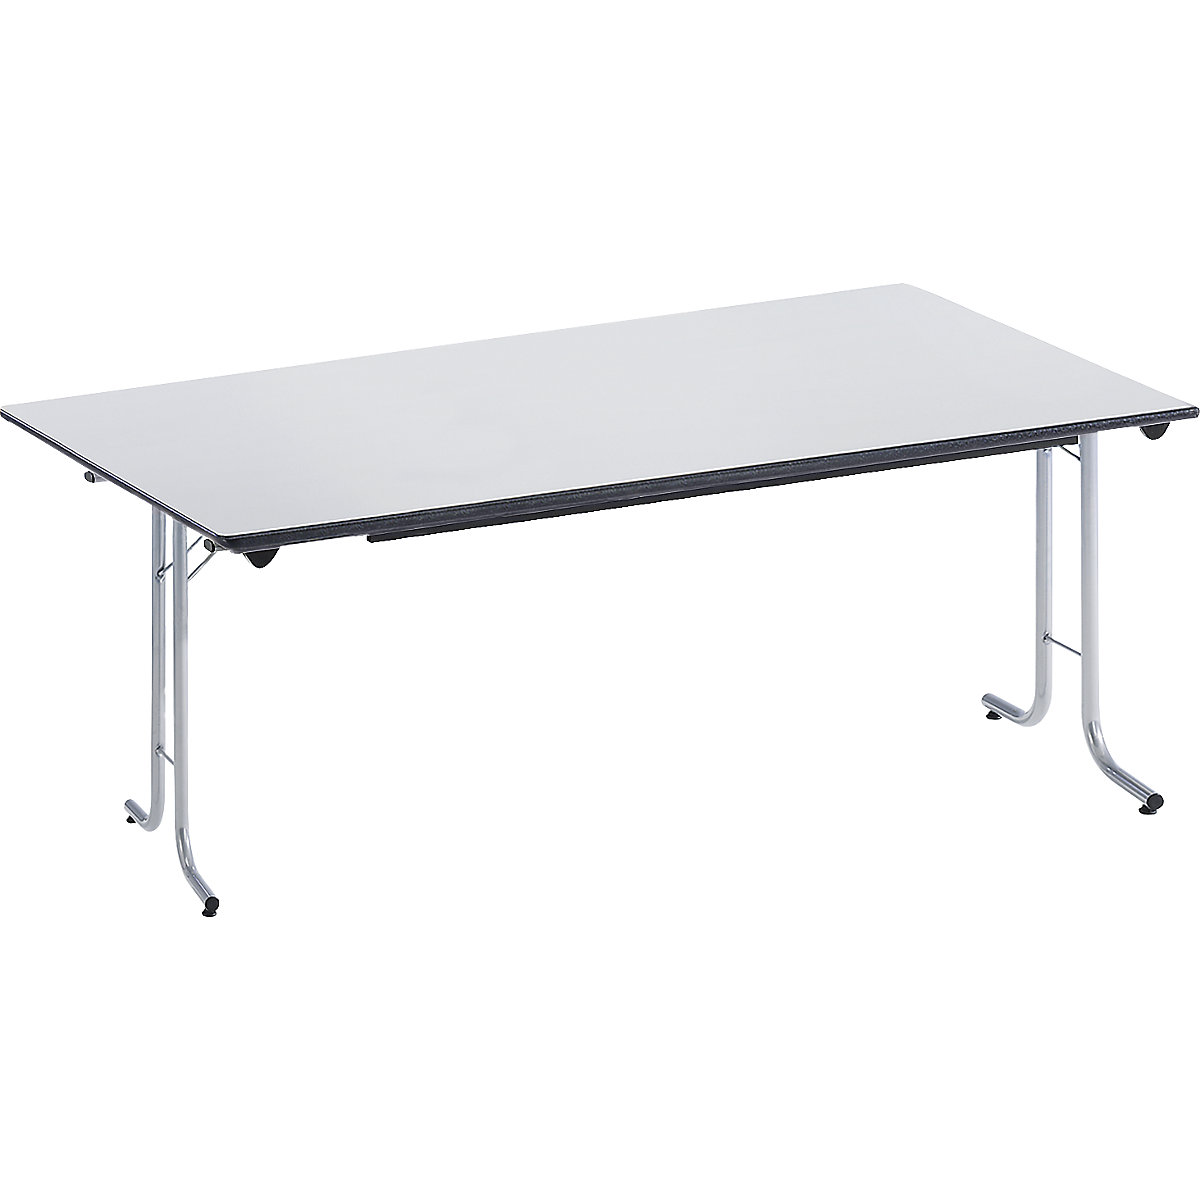 Folding table, with rounded edges, round tubular frame, rectangular top, 1600 x 800 mm, aluminium coloured frame, light grey tabletop-6